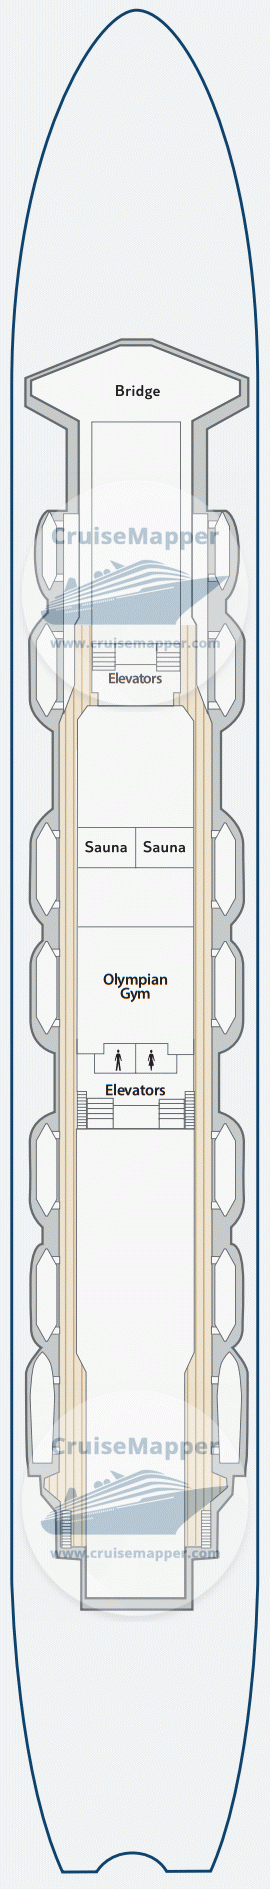 Celestyal Olympia Deck 08 - Ouranos-Bridge-Spa-Gym